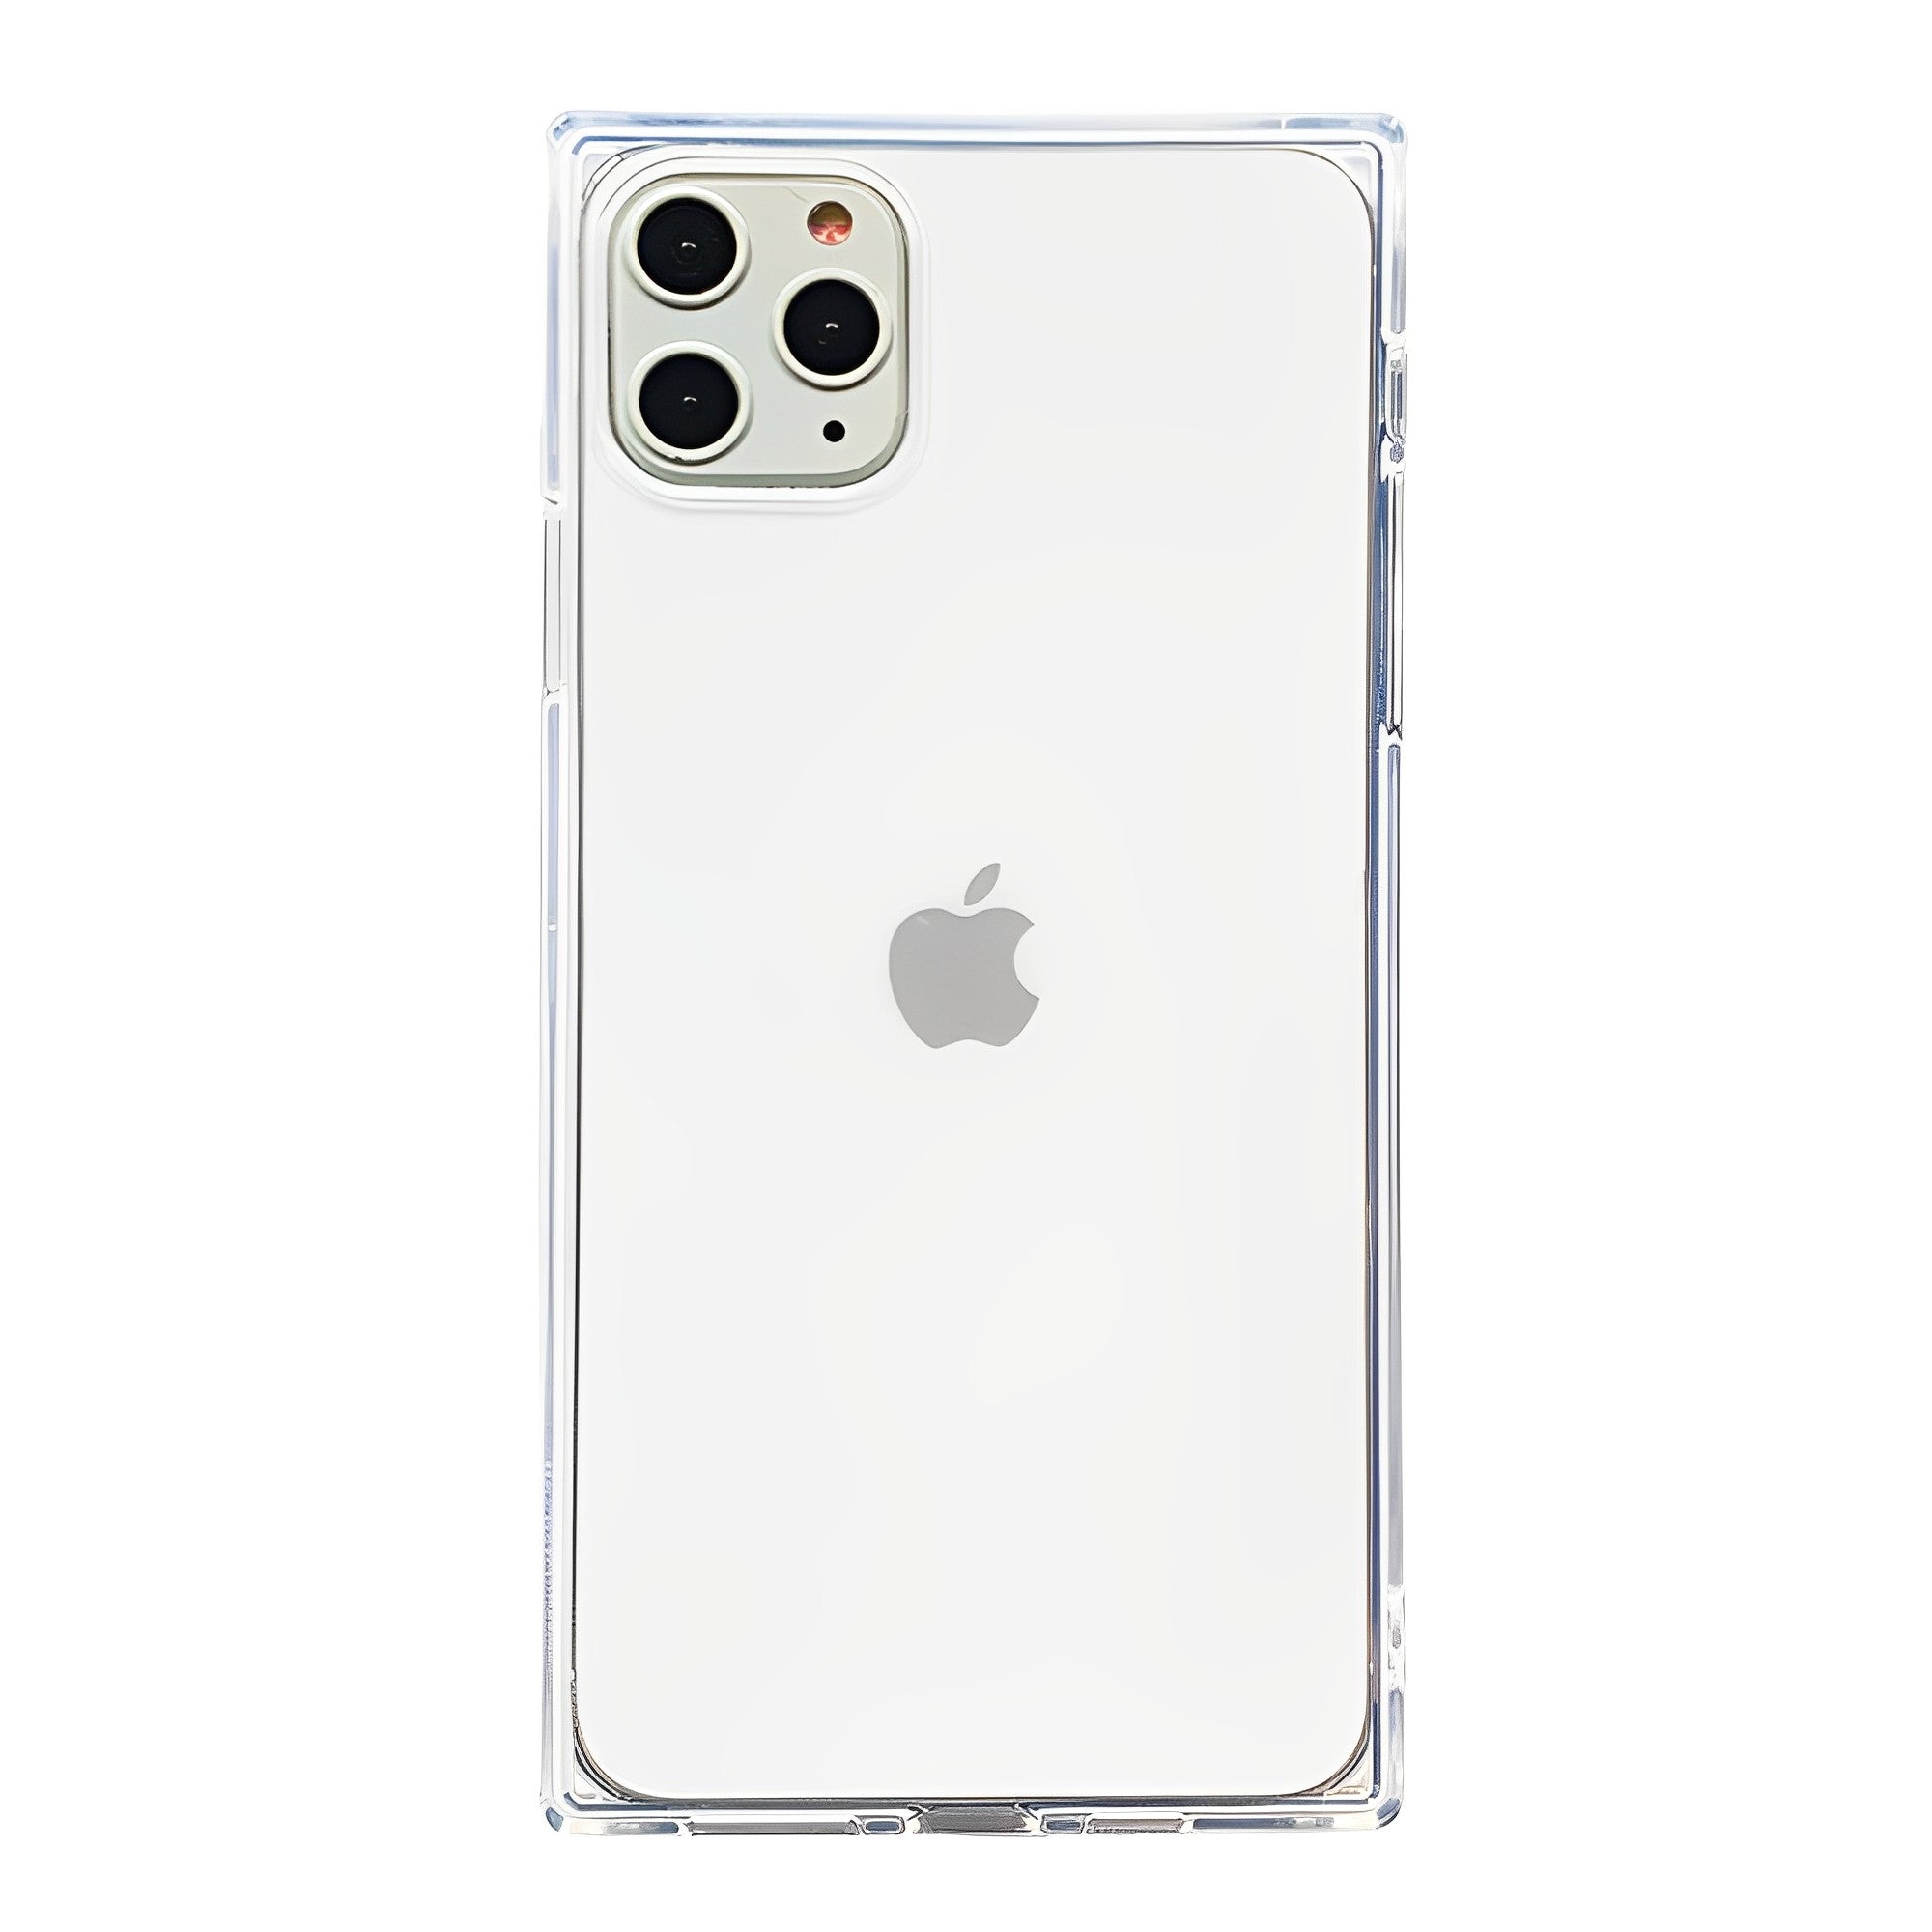  Tzomsze Compatible for iPhone 11 Clear Case,Square